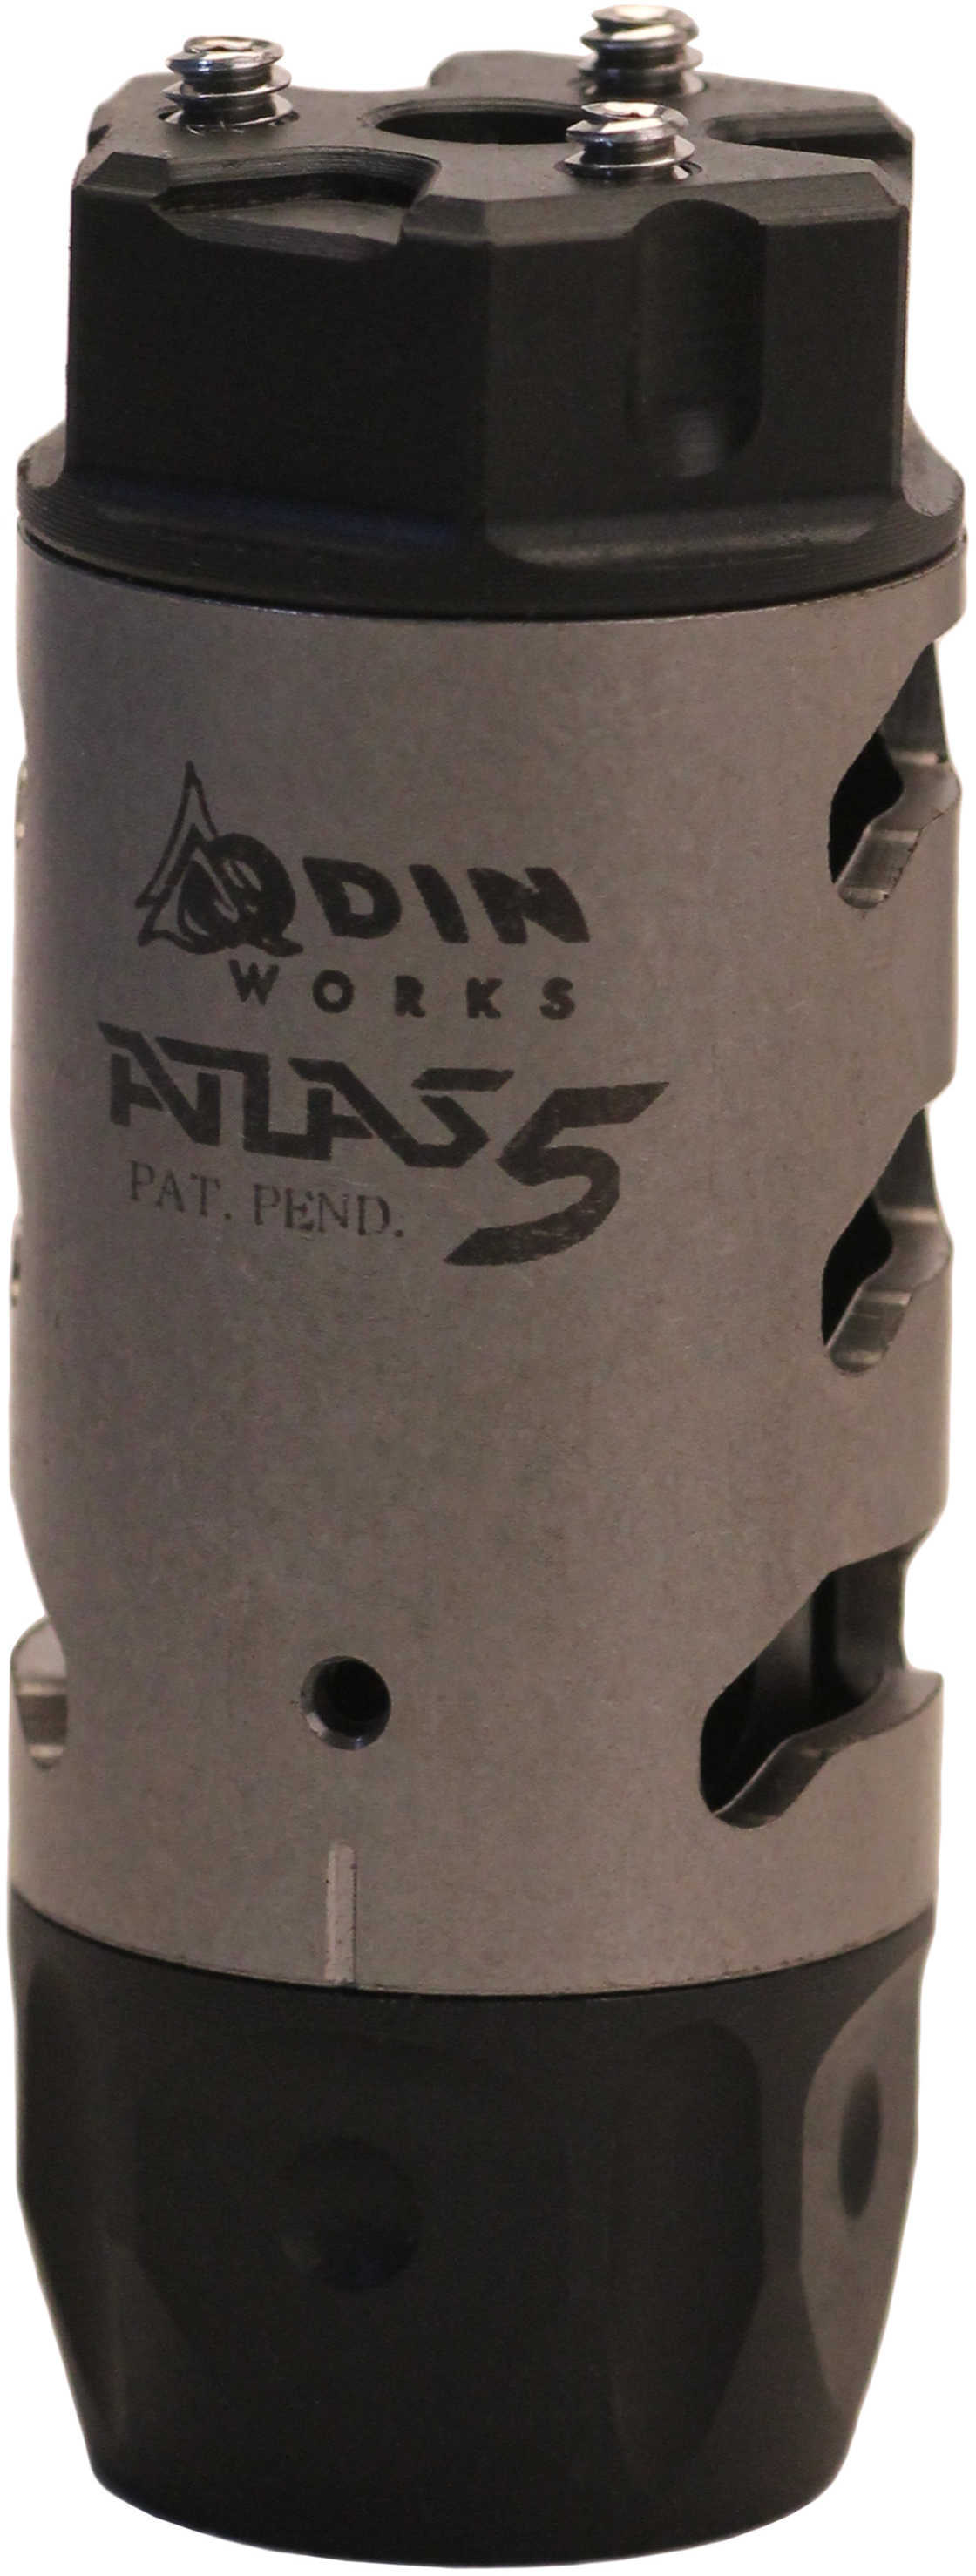 Odin Works Atlas 5 Muzzle Brake 223REM/556NATO 1/2-28 Threaded Stainless Steel MB-ATLAS-5